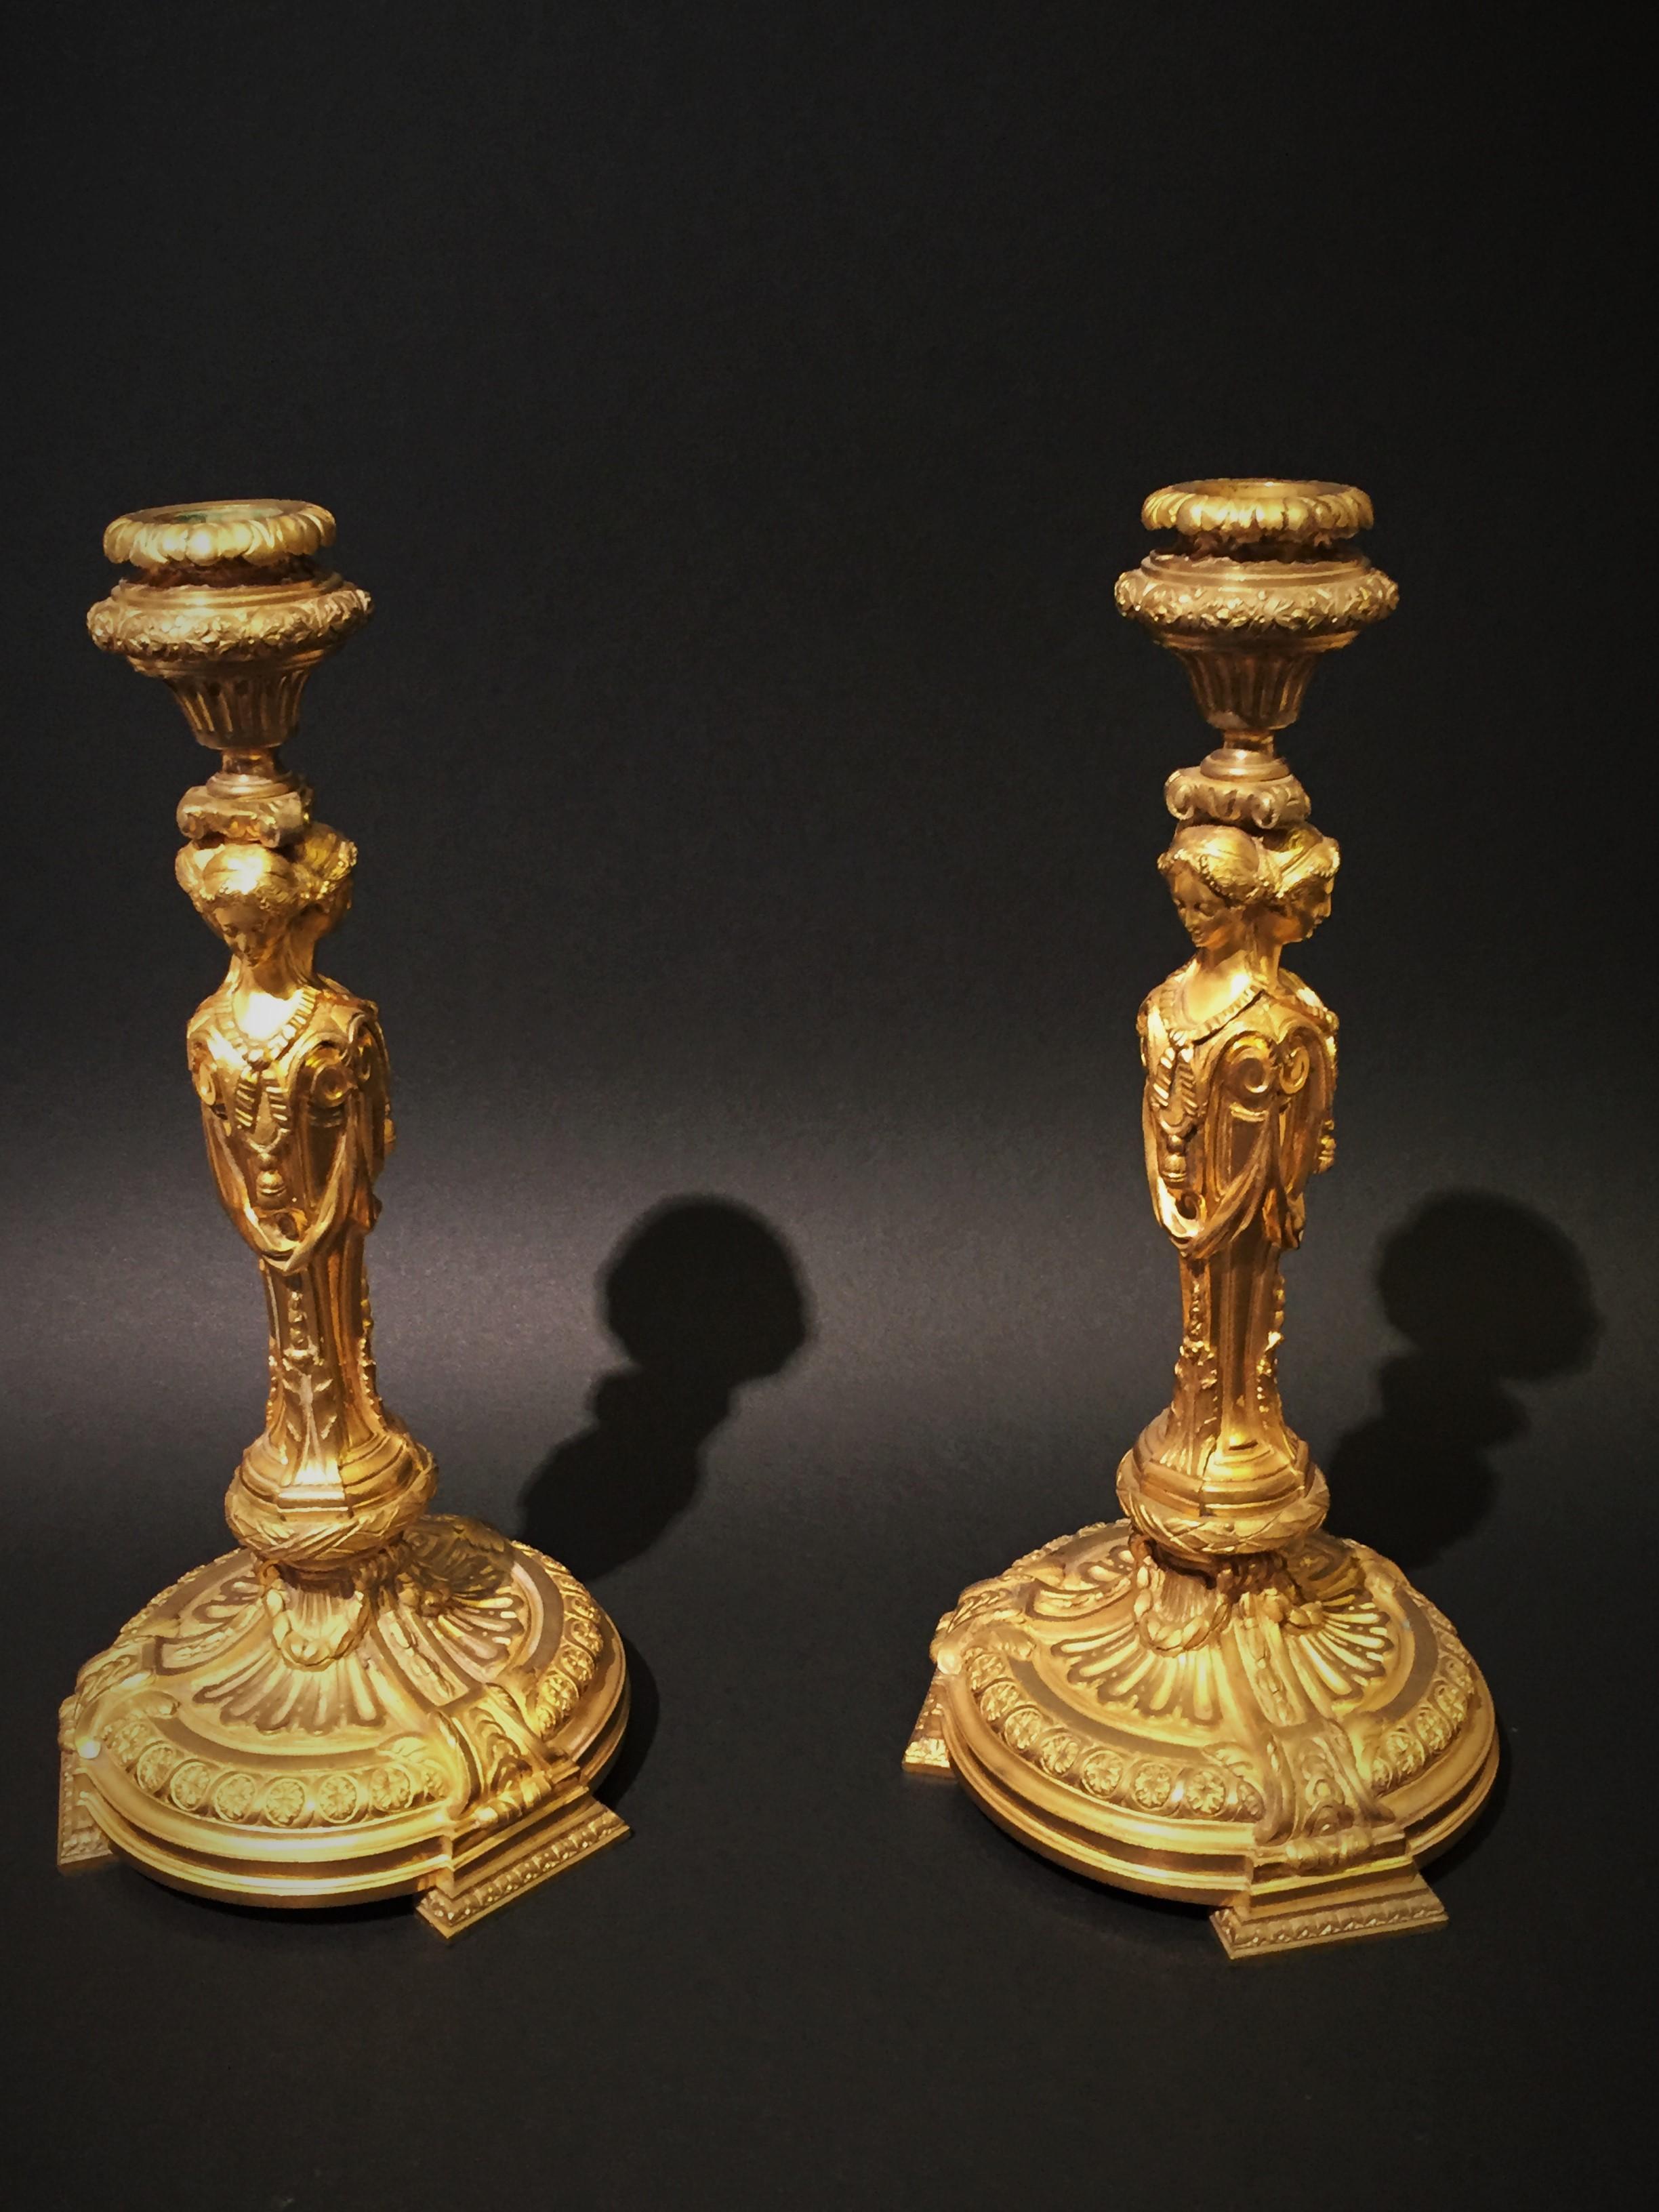 19th century Louis XVI gilded bronze French candlesticks.